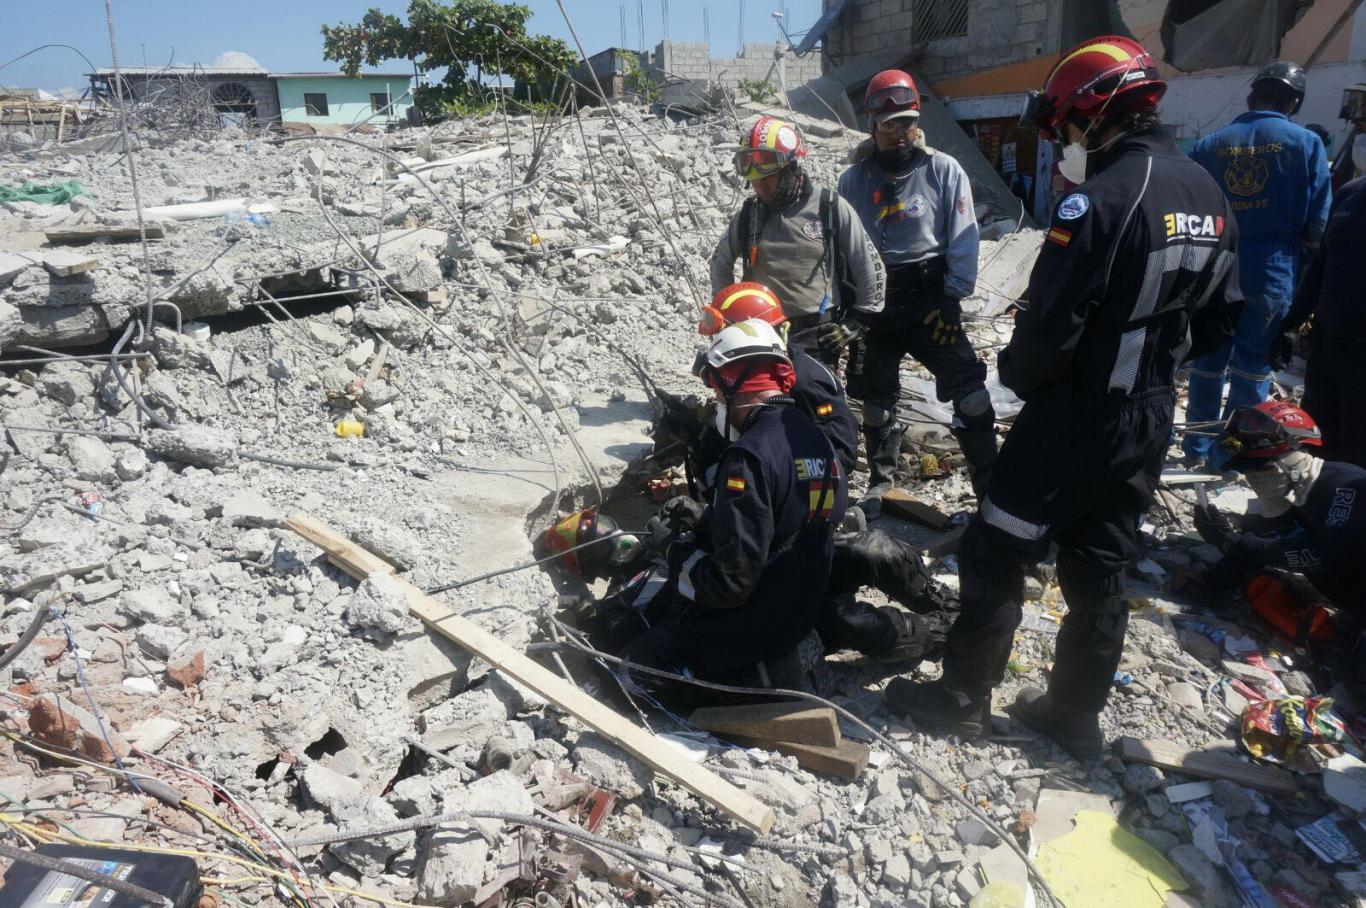 Intervention of ERICAM in the Ecuador earthquake in 2016